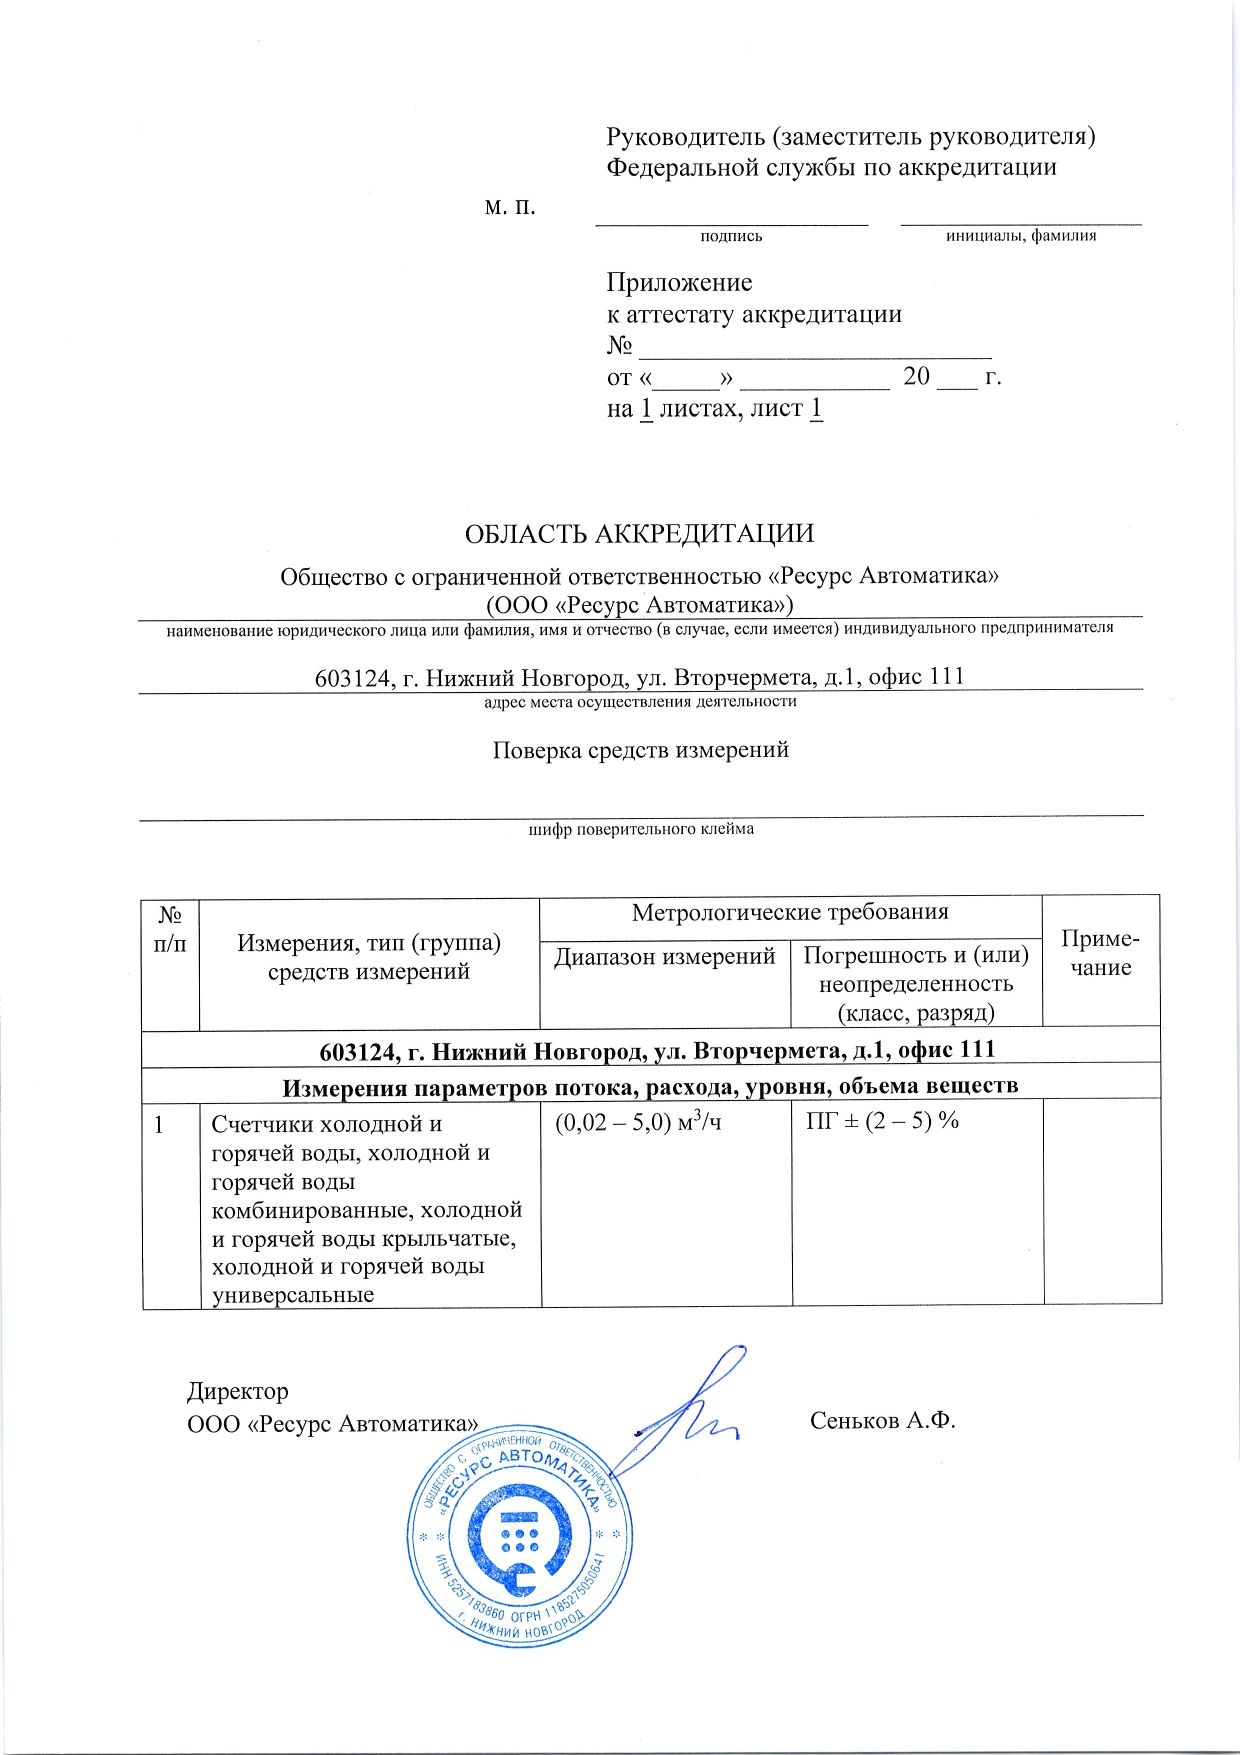 Сертификат ООО "Ресурс Автоматика"